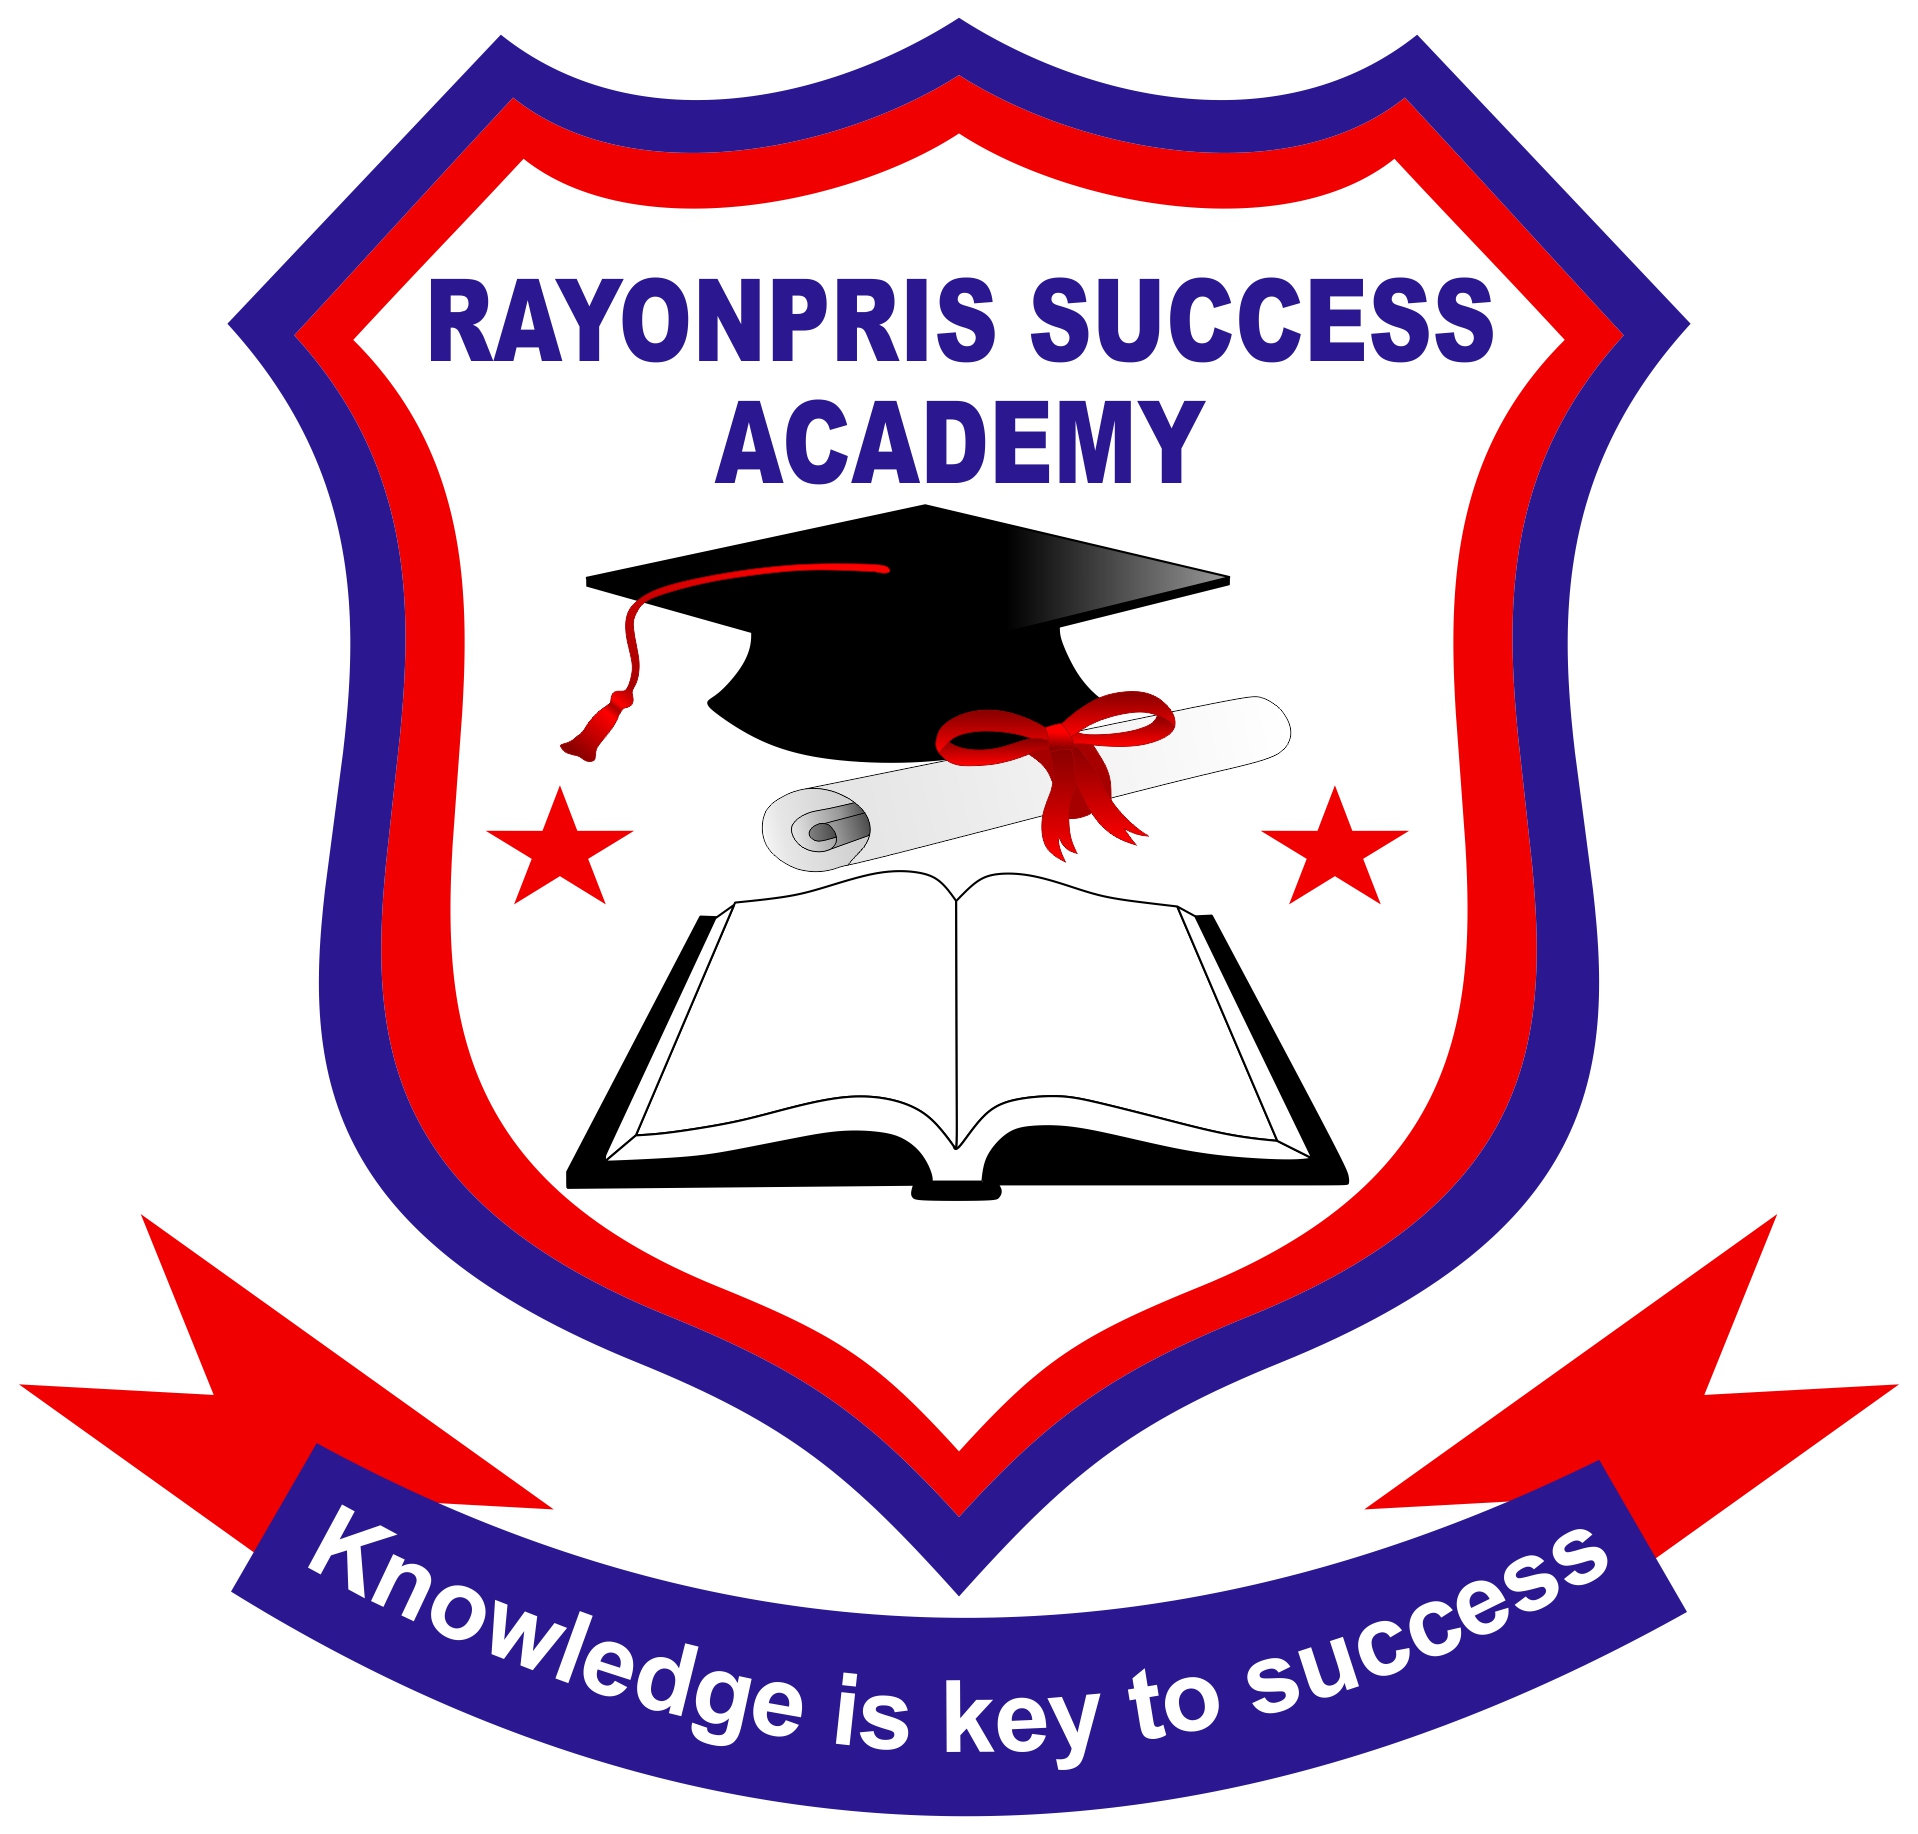 RAYONPRIS SUCCESS ACADEMY